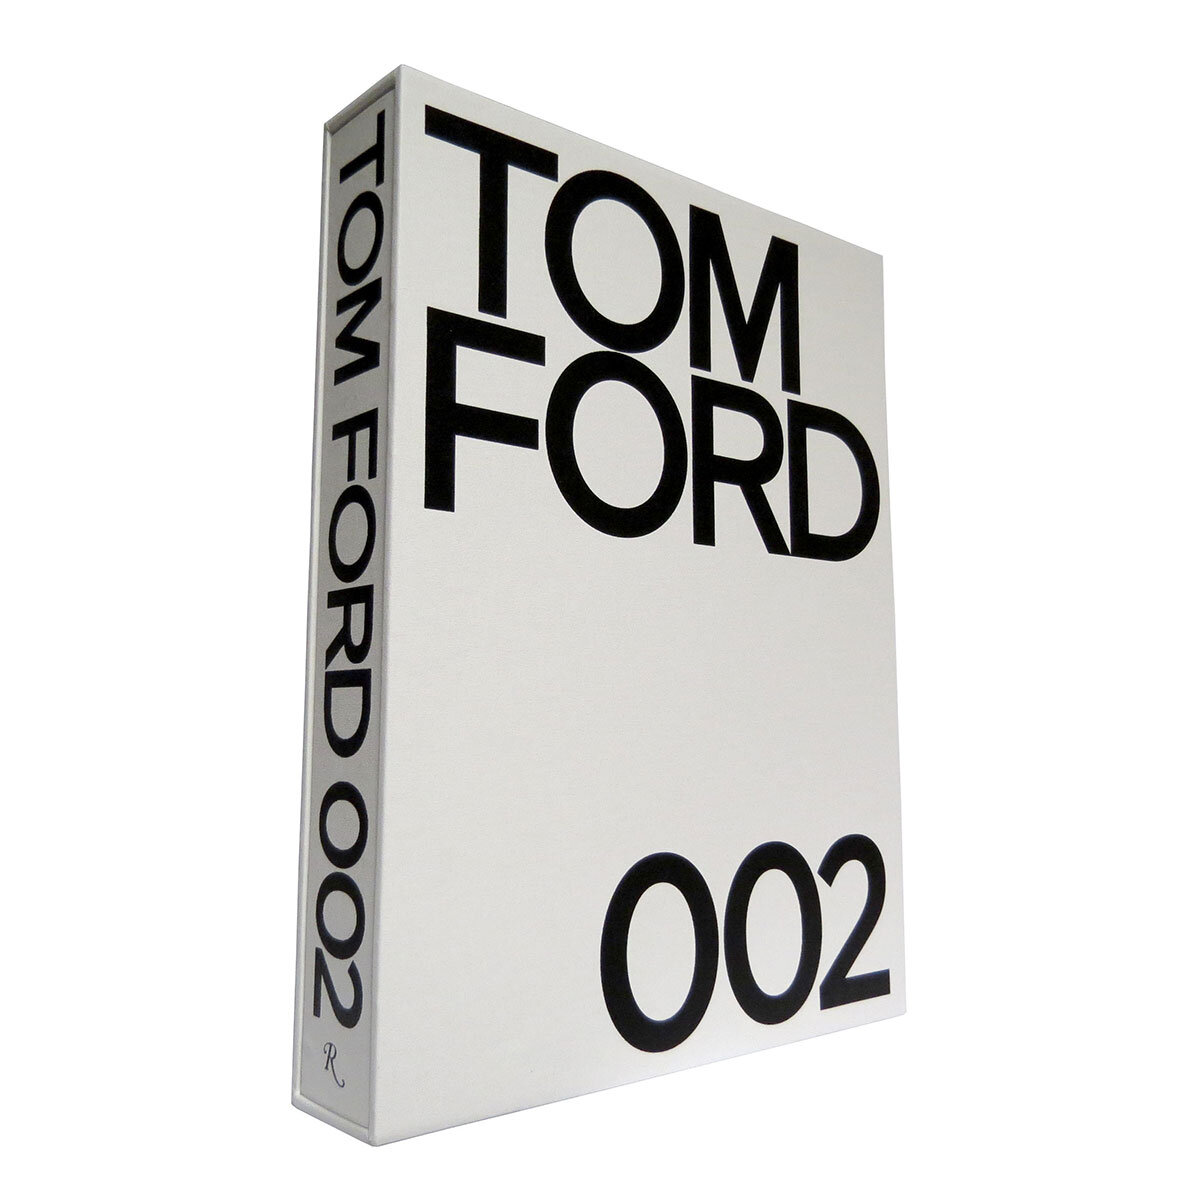 Tom Ford 002 | Costco UK